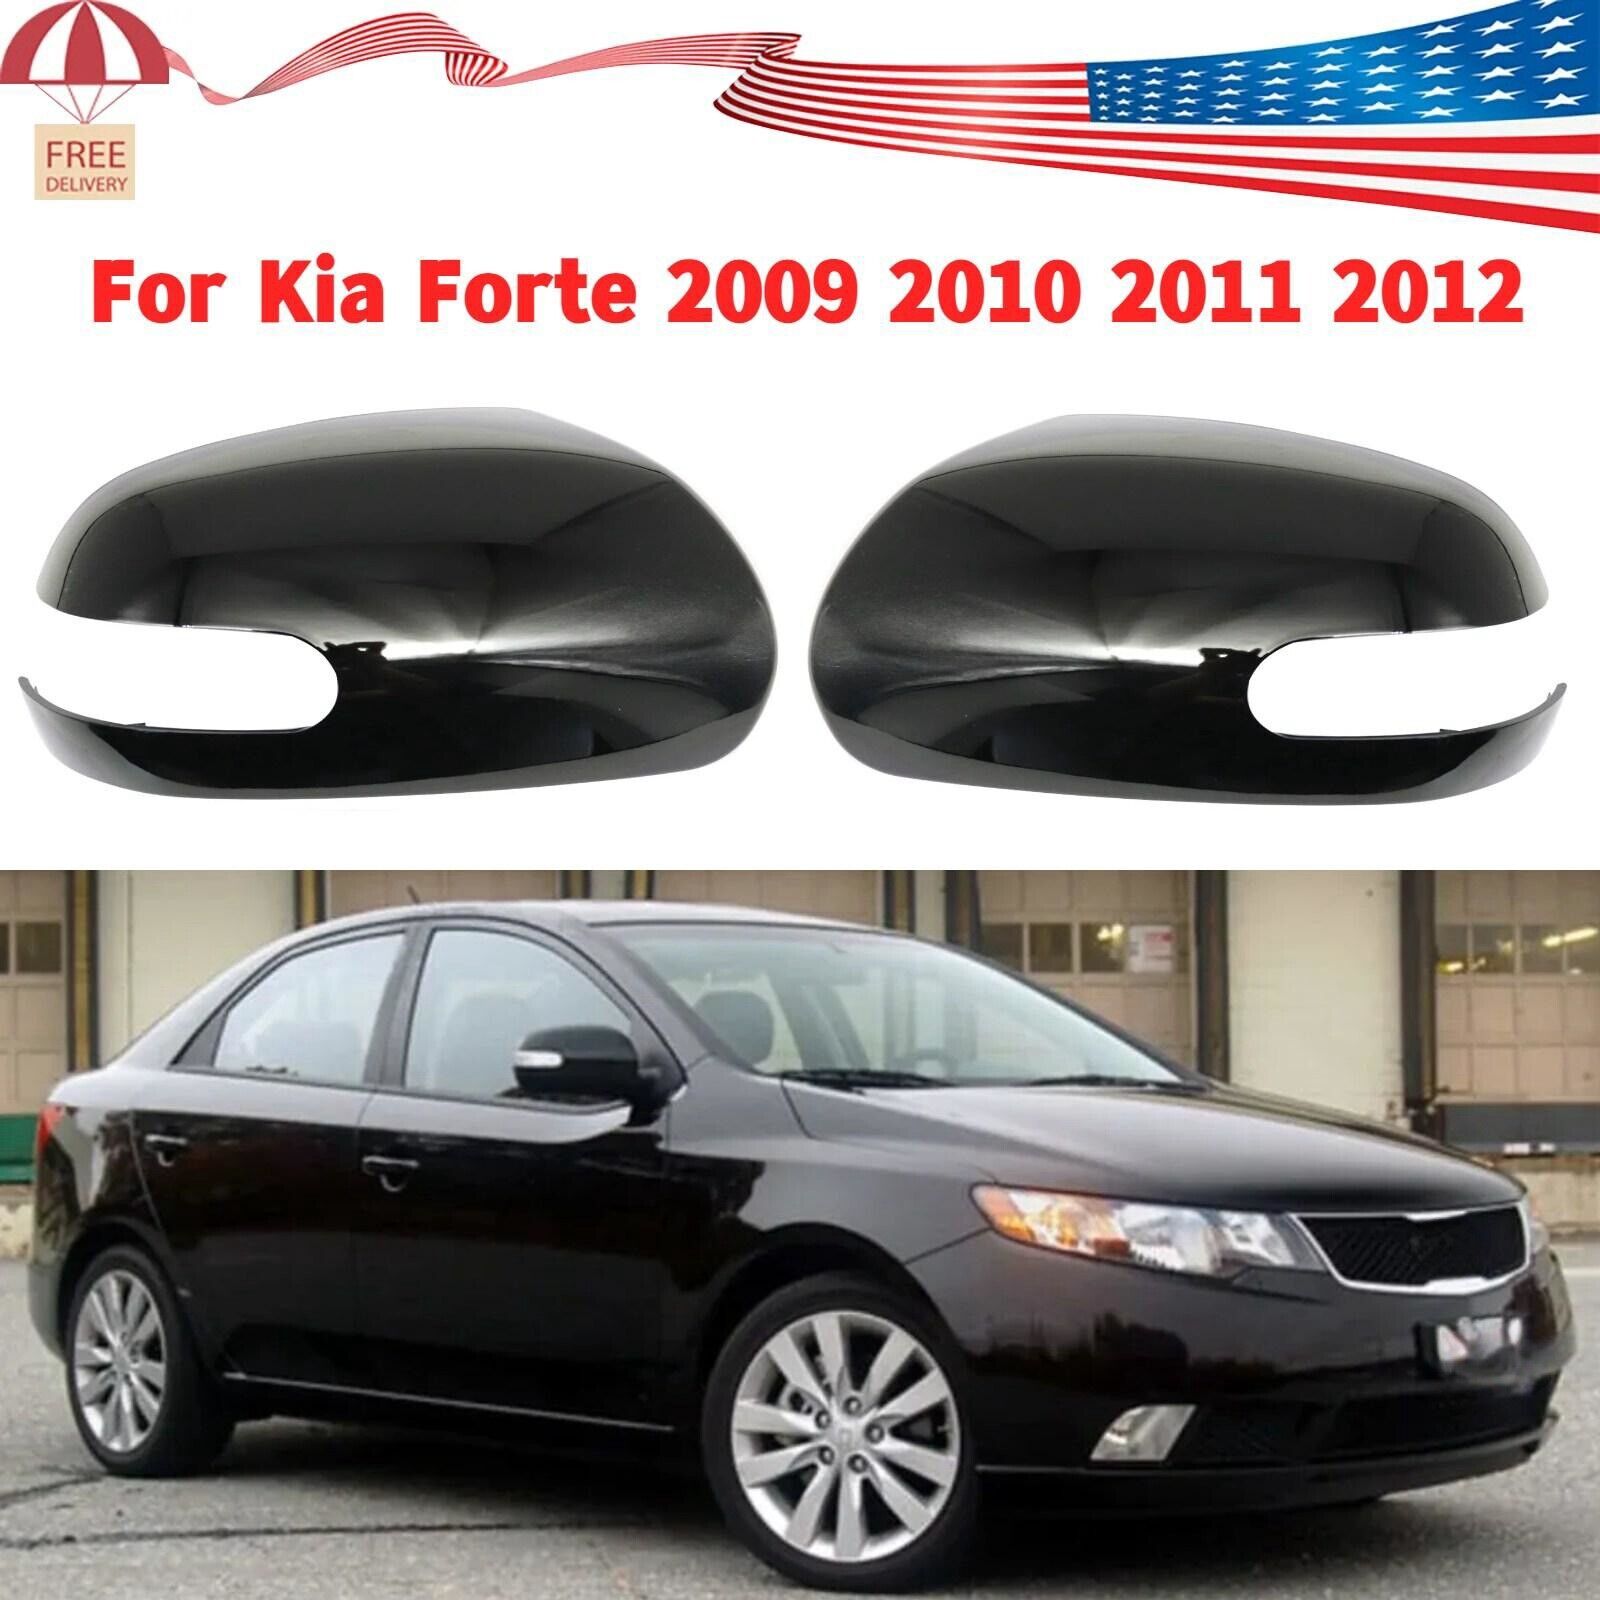 For Kia Forte Glossy Black Side Door Mirror Cover Cap 2009 2010 2011 2012